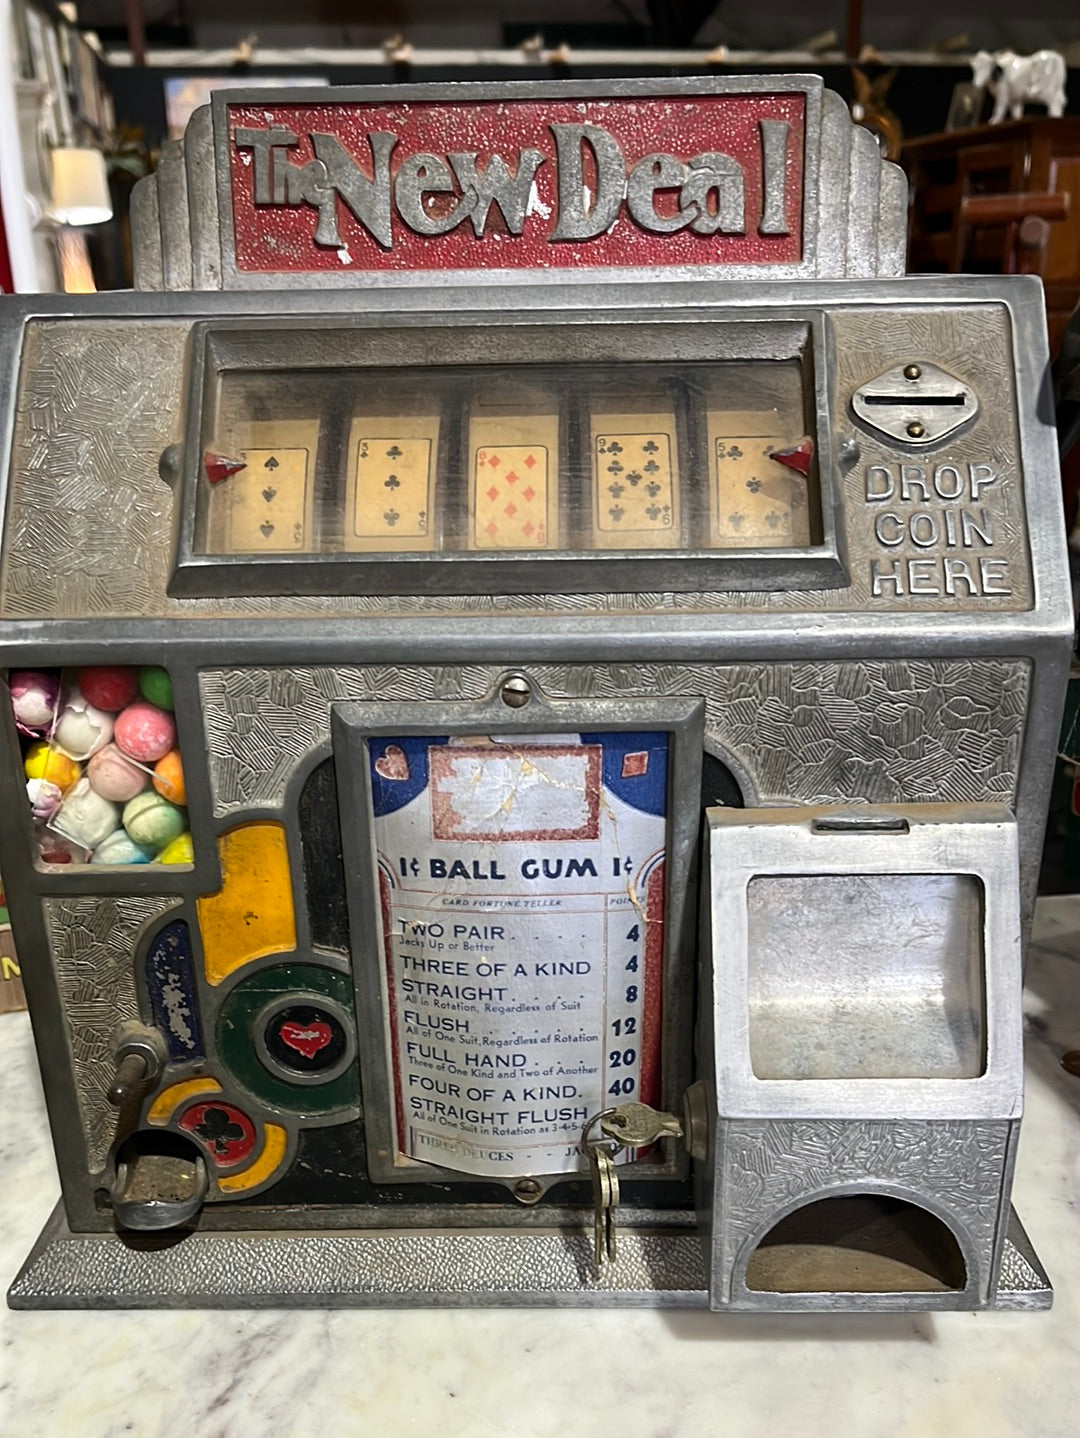 New Deal Slot machine